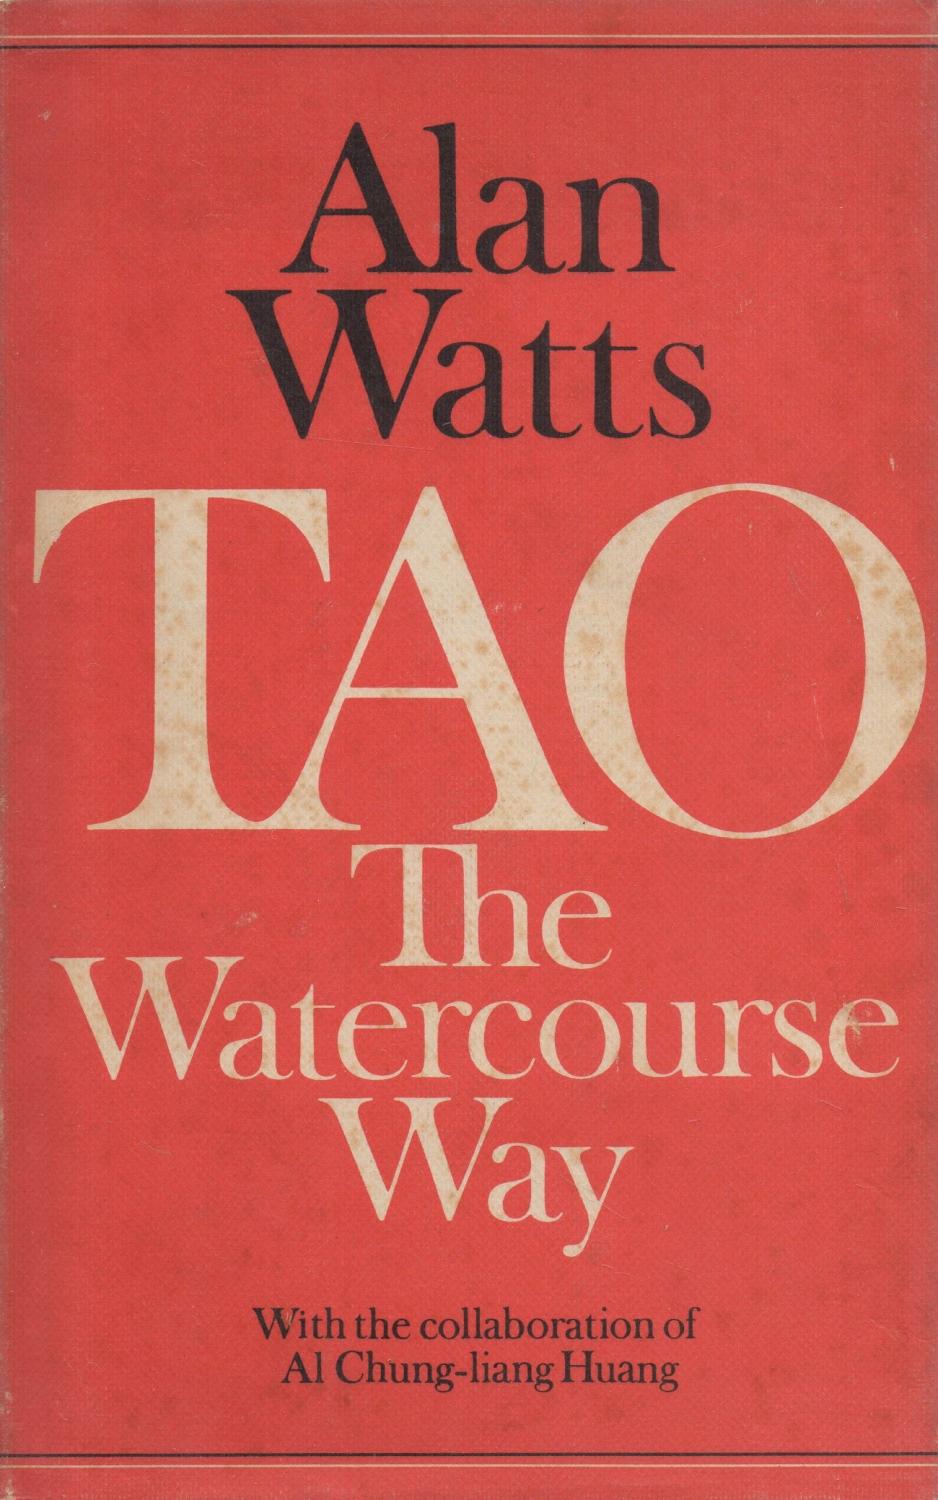 tao watercourse way alan watts free book download